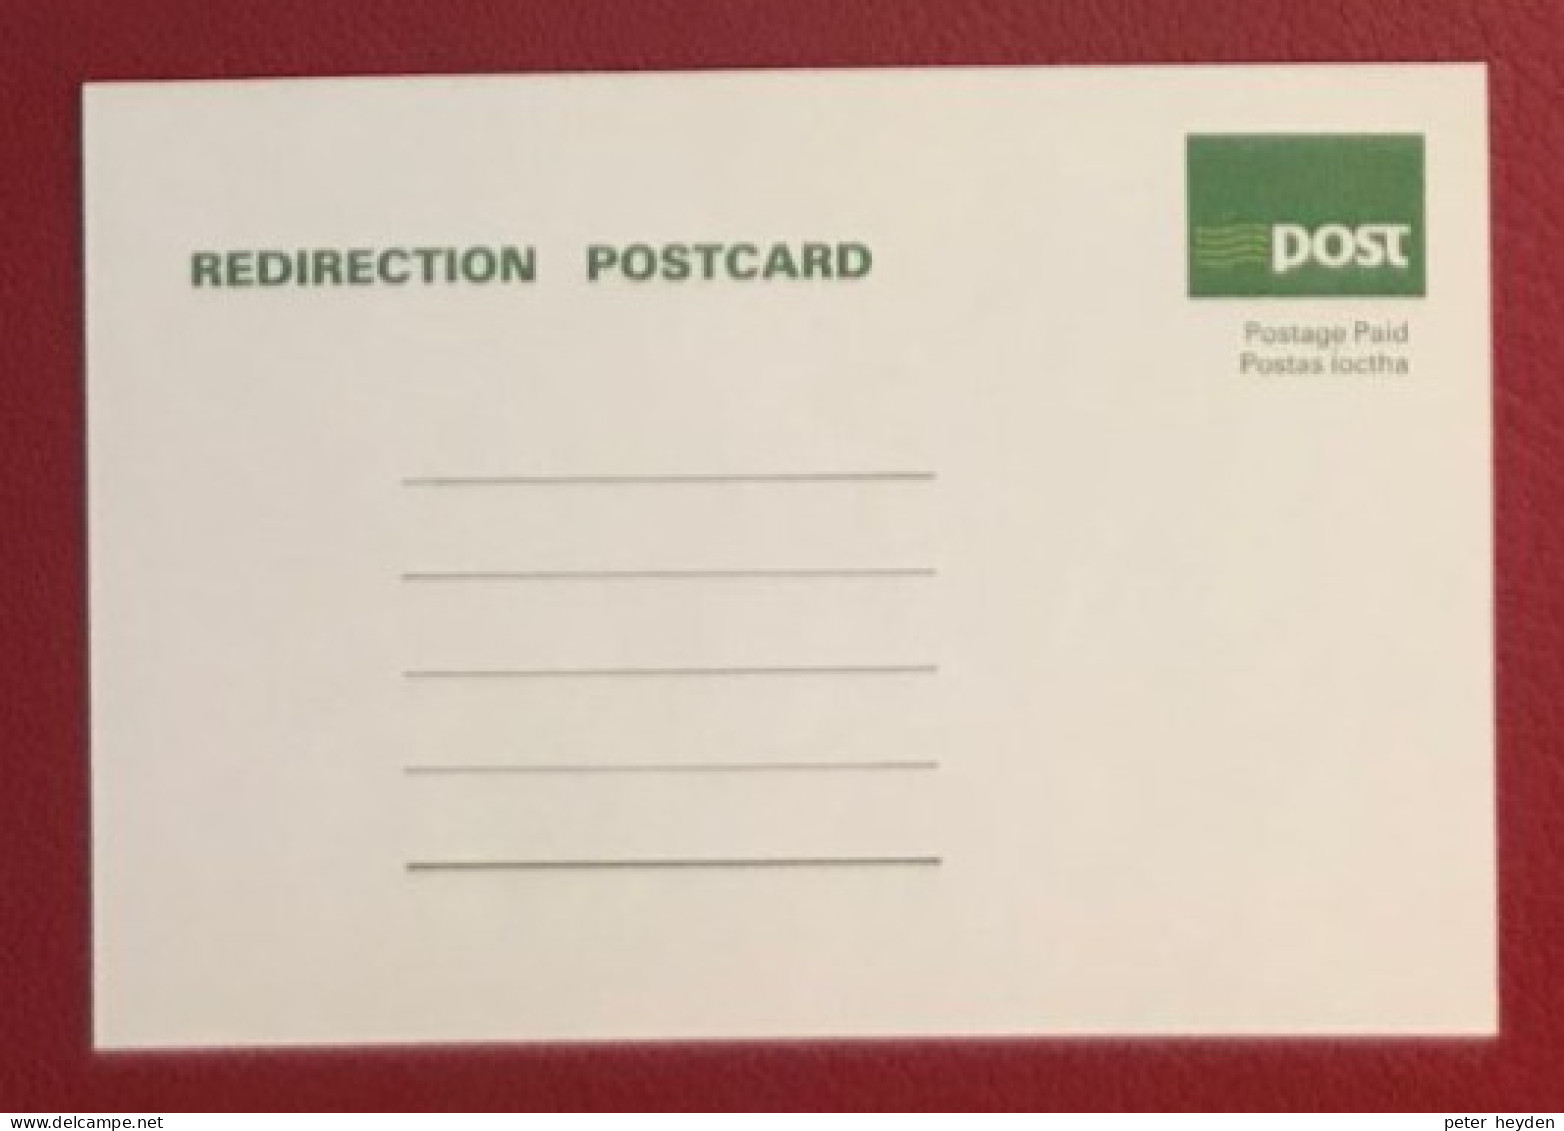 IRELAND 1986 Unused Redirection Postcard PP (25p) ~ MacDonnell Whyte PSM1 - Enteros Postales